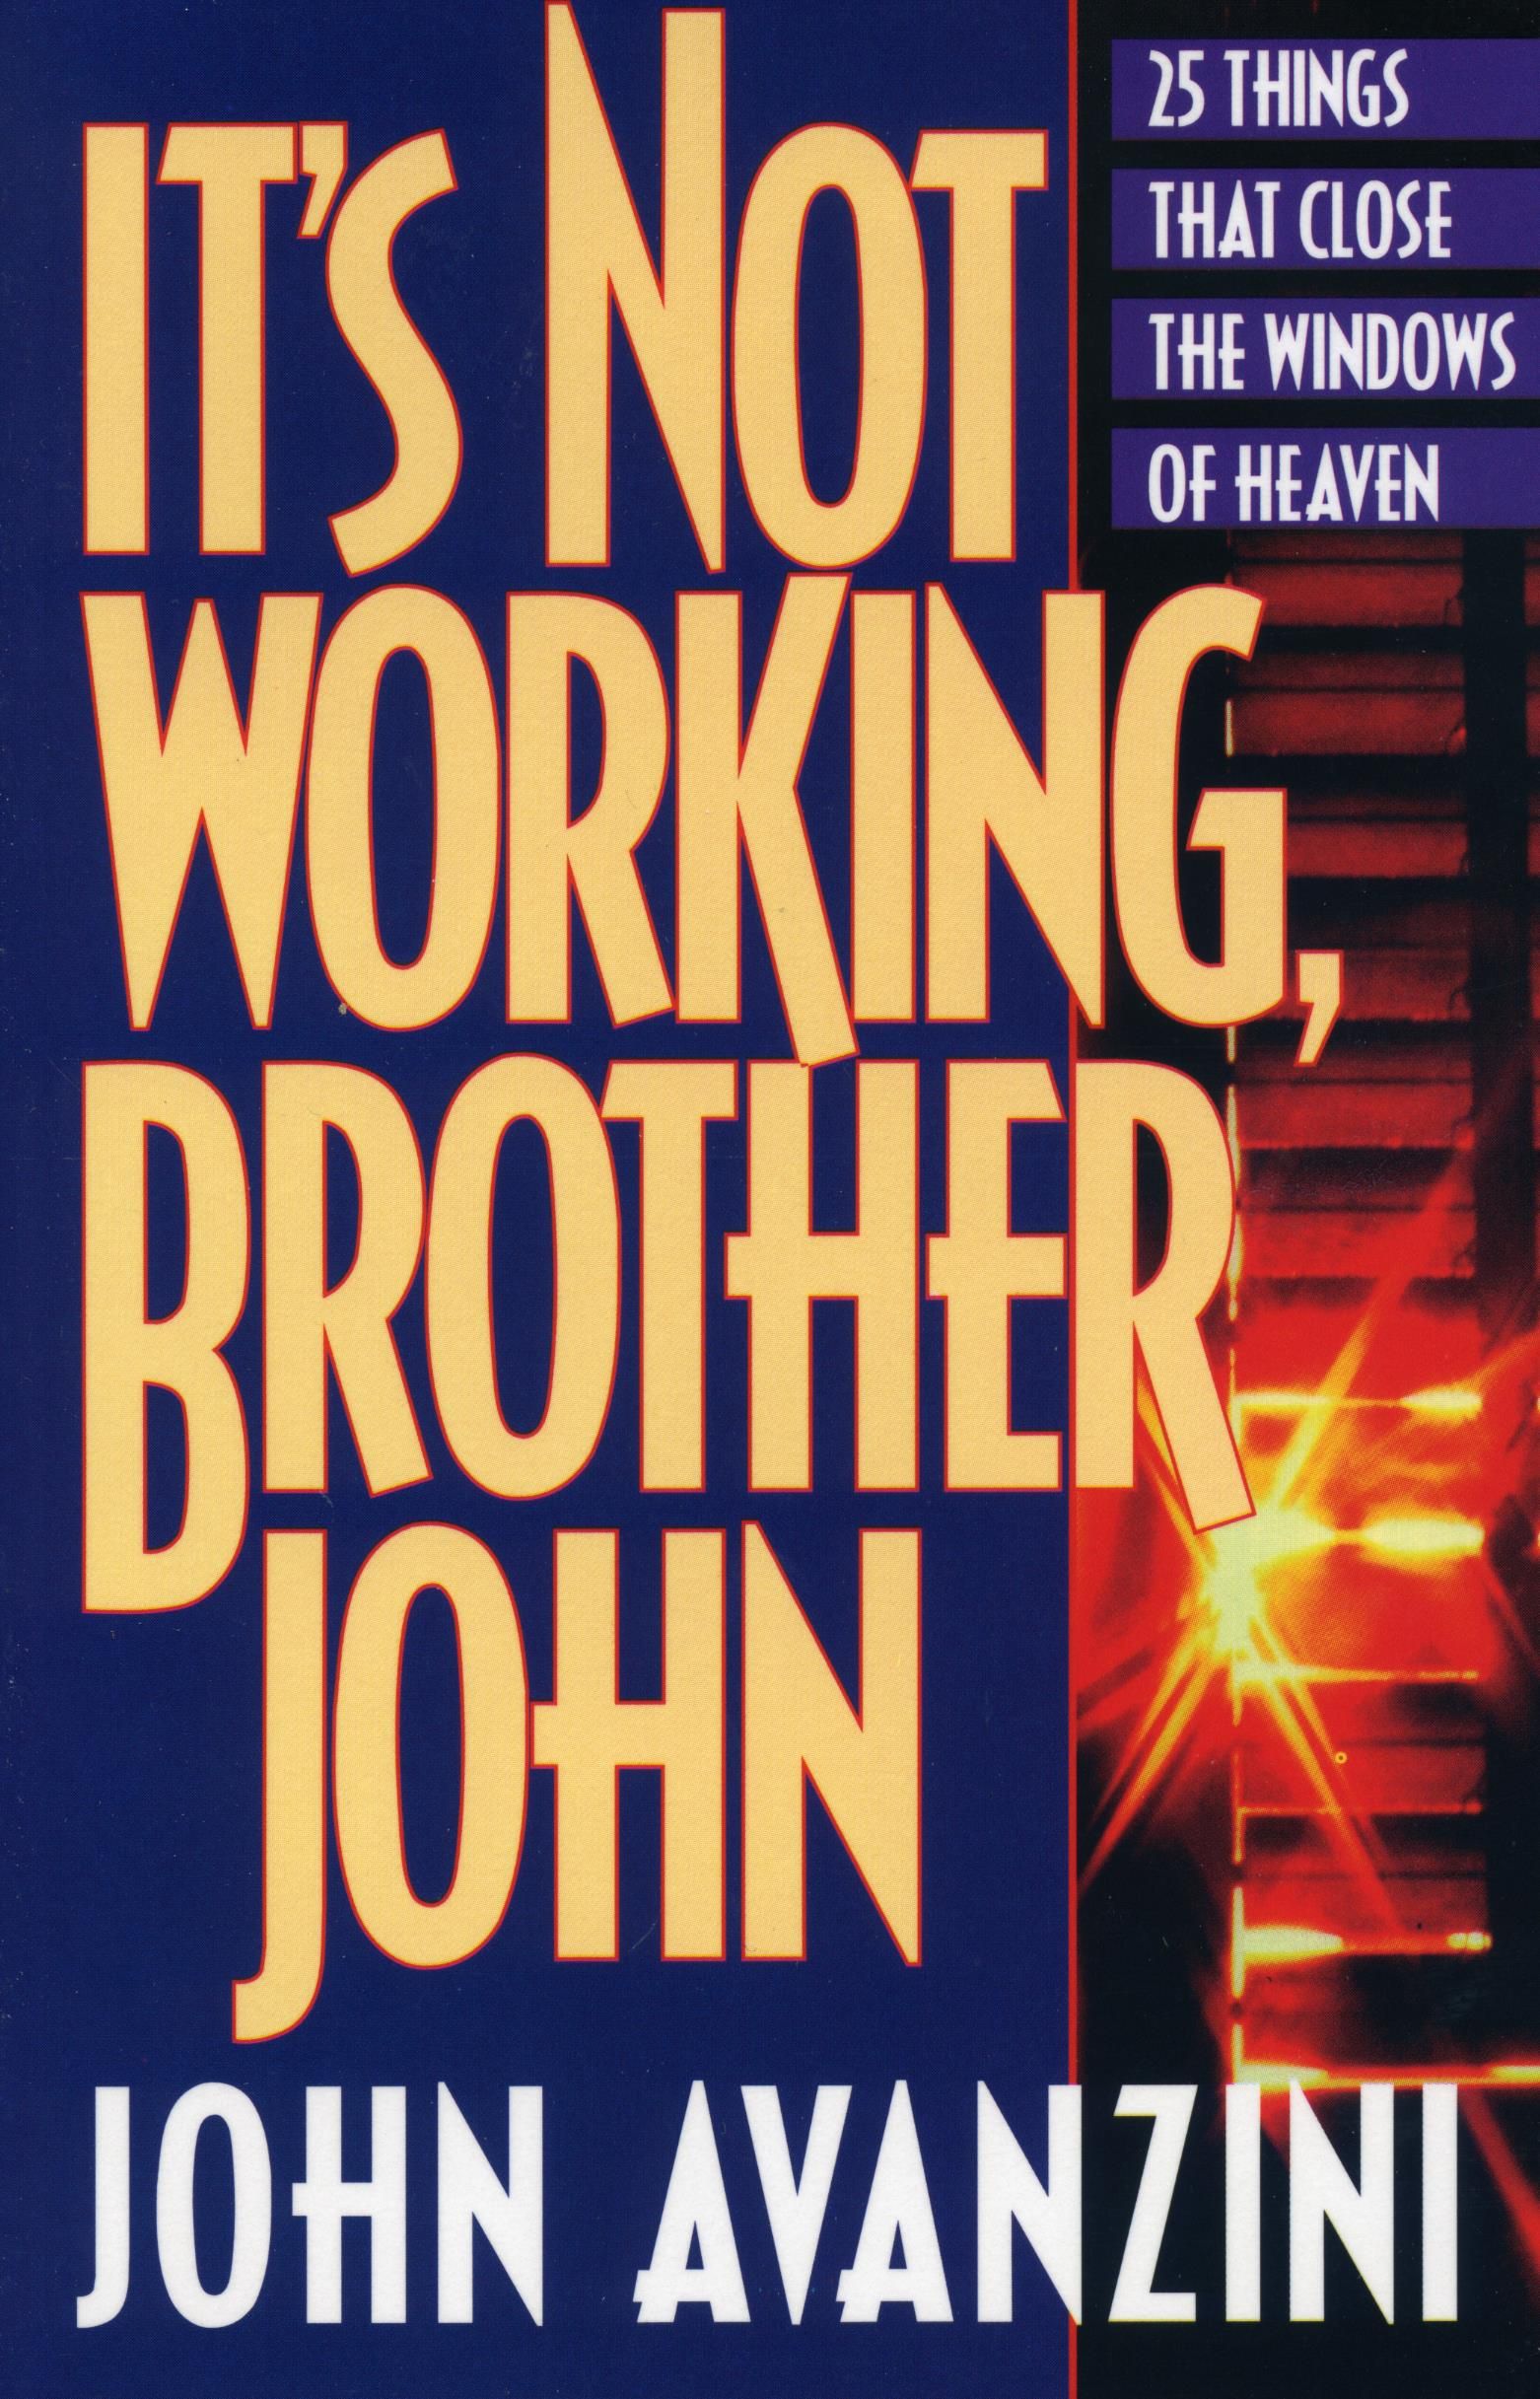 John Avanzini: It's Not Working Brother John!